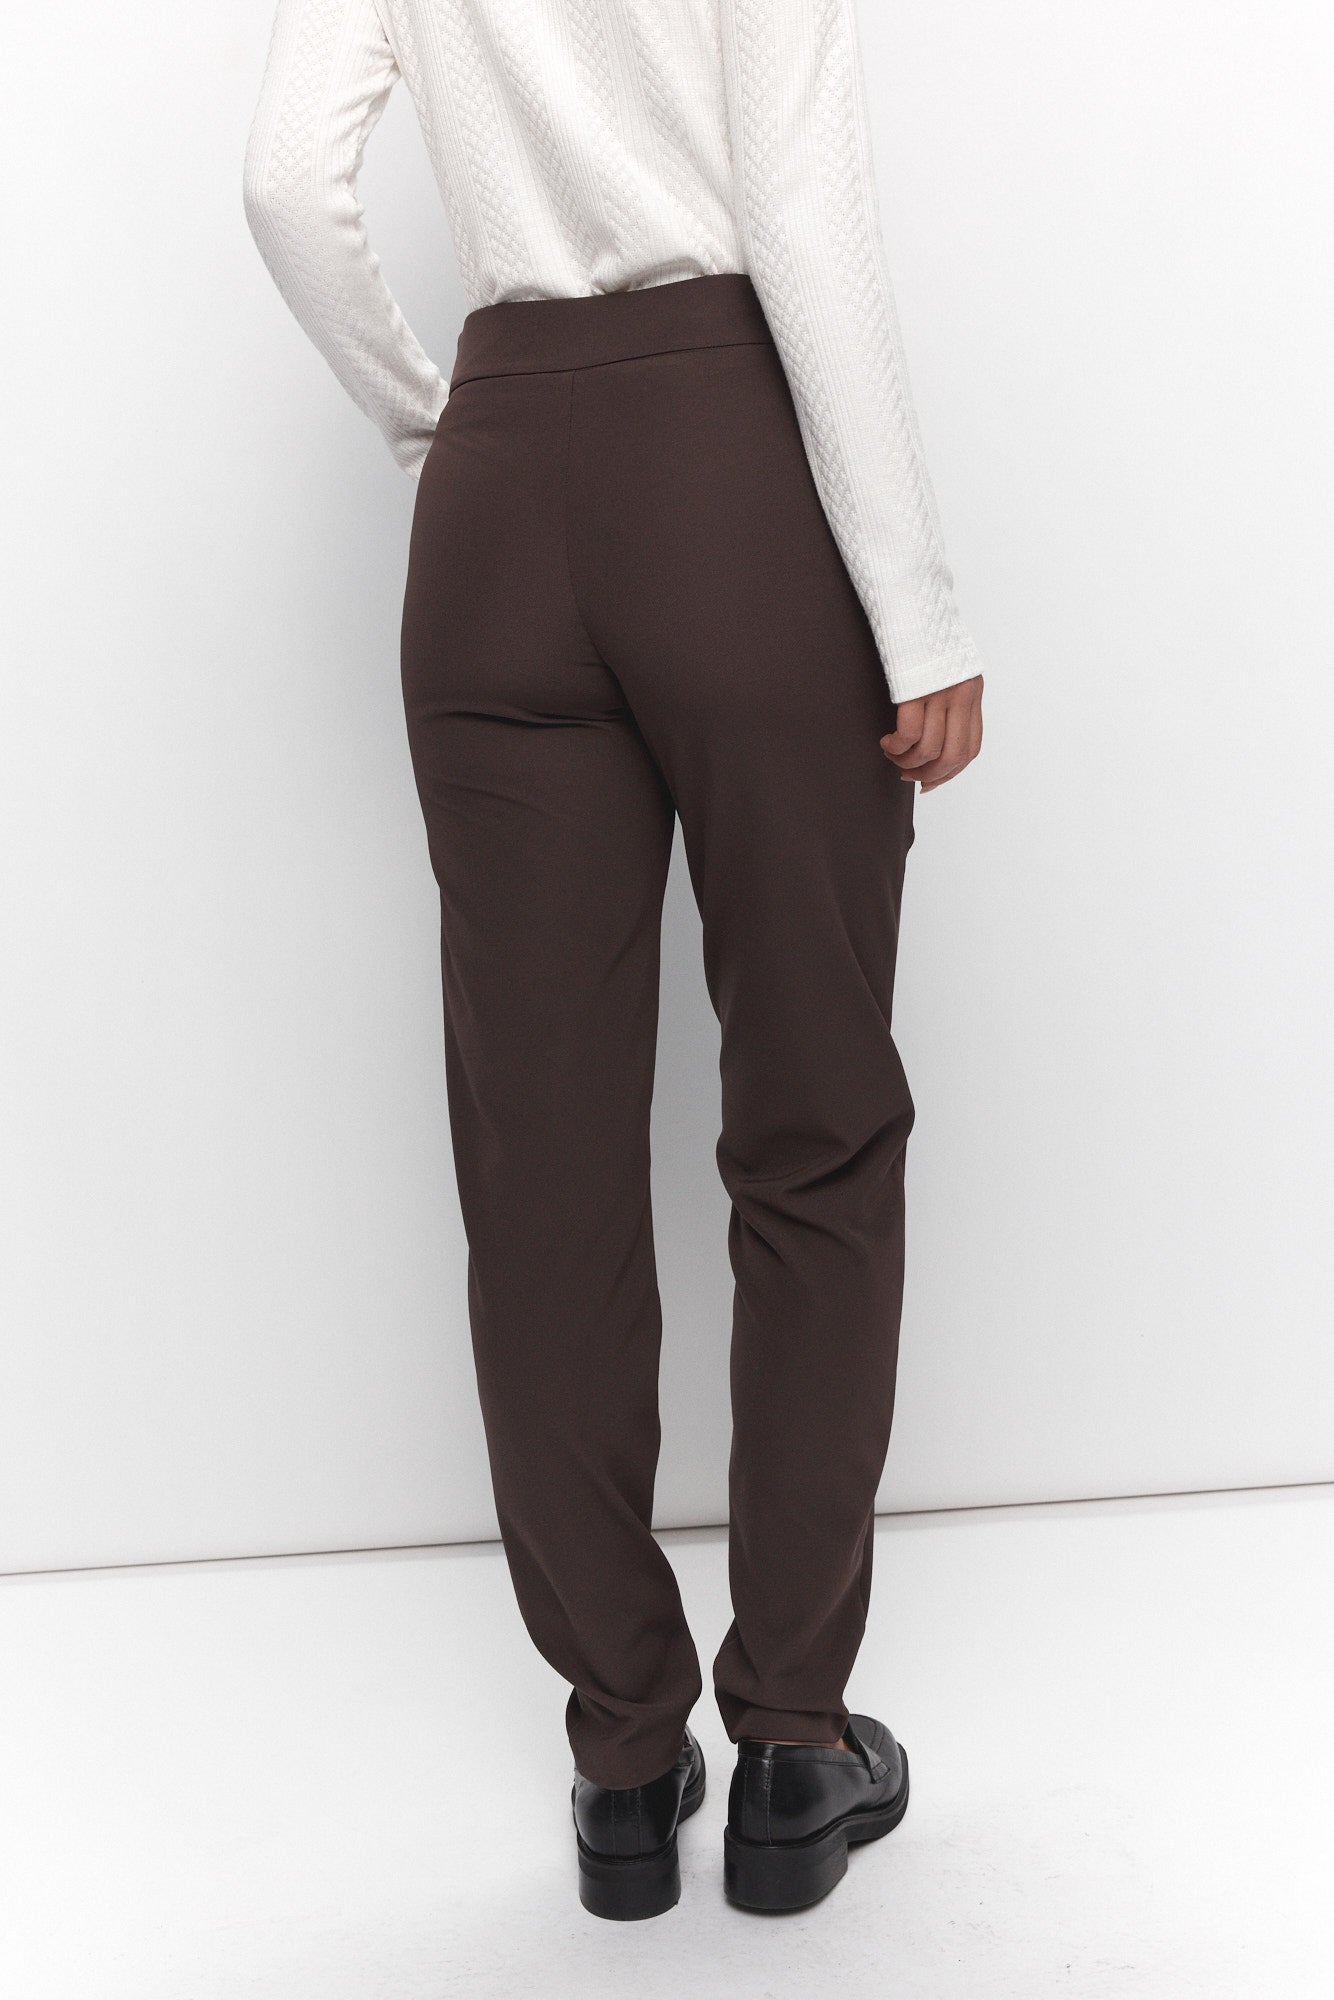 Pantalon marron | Florane